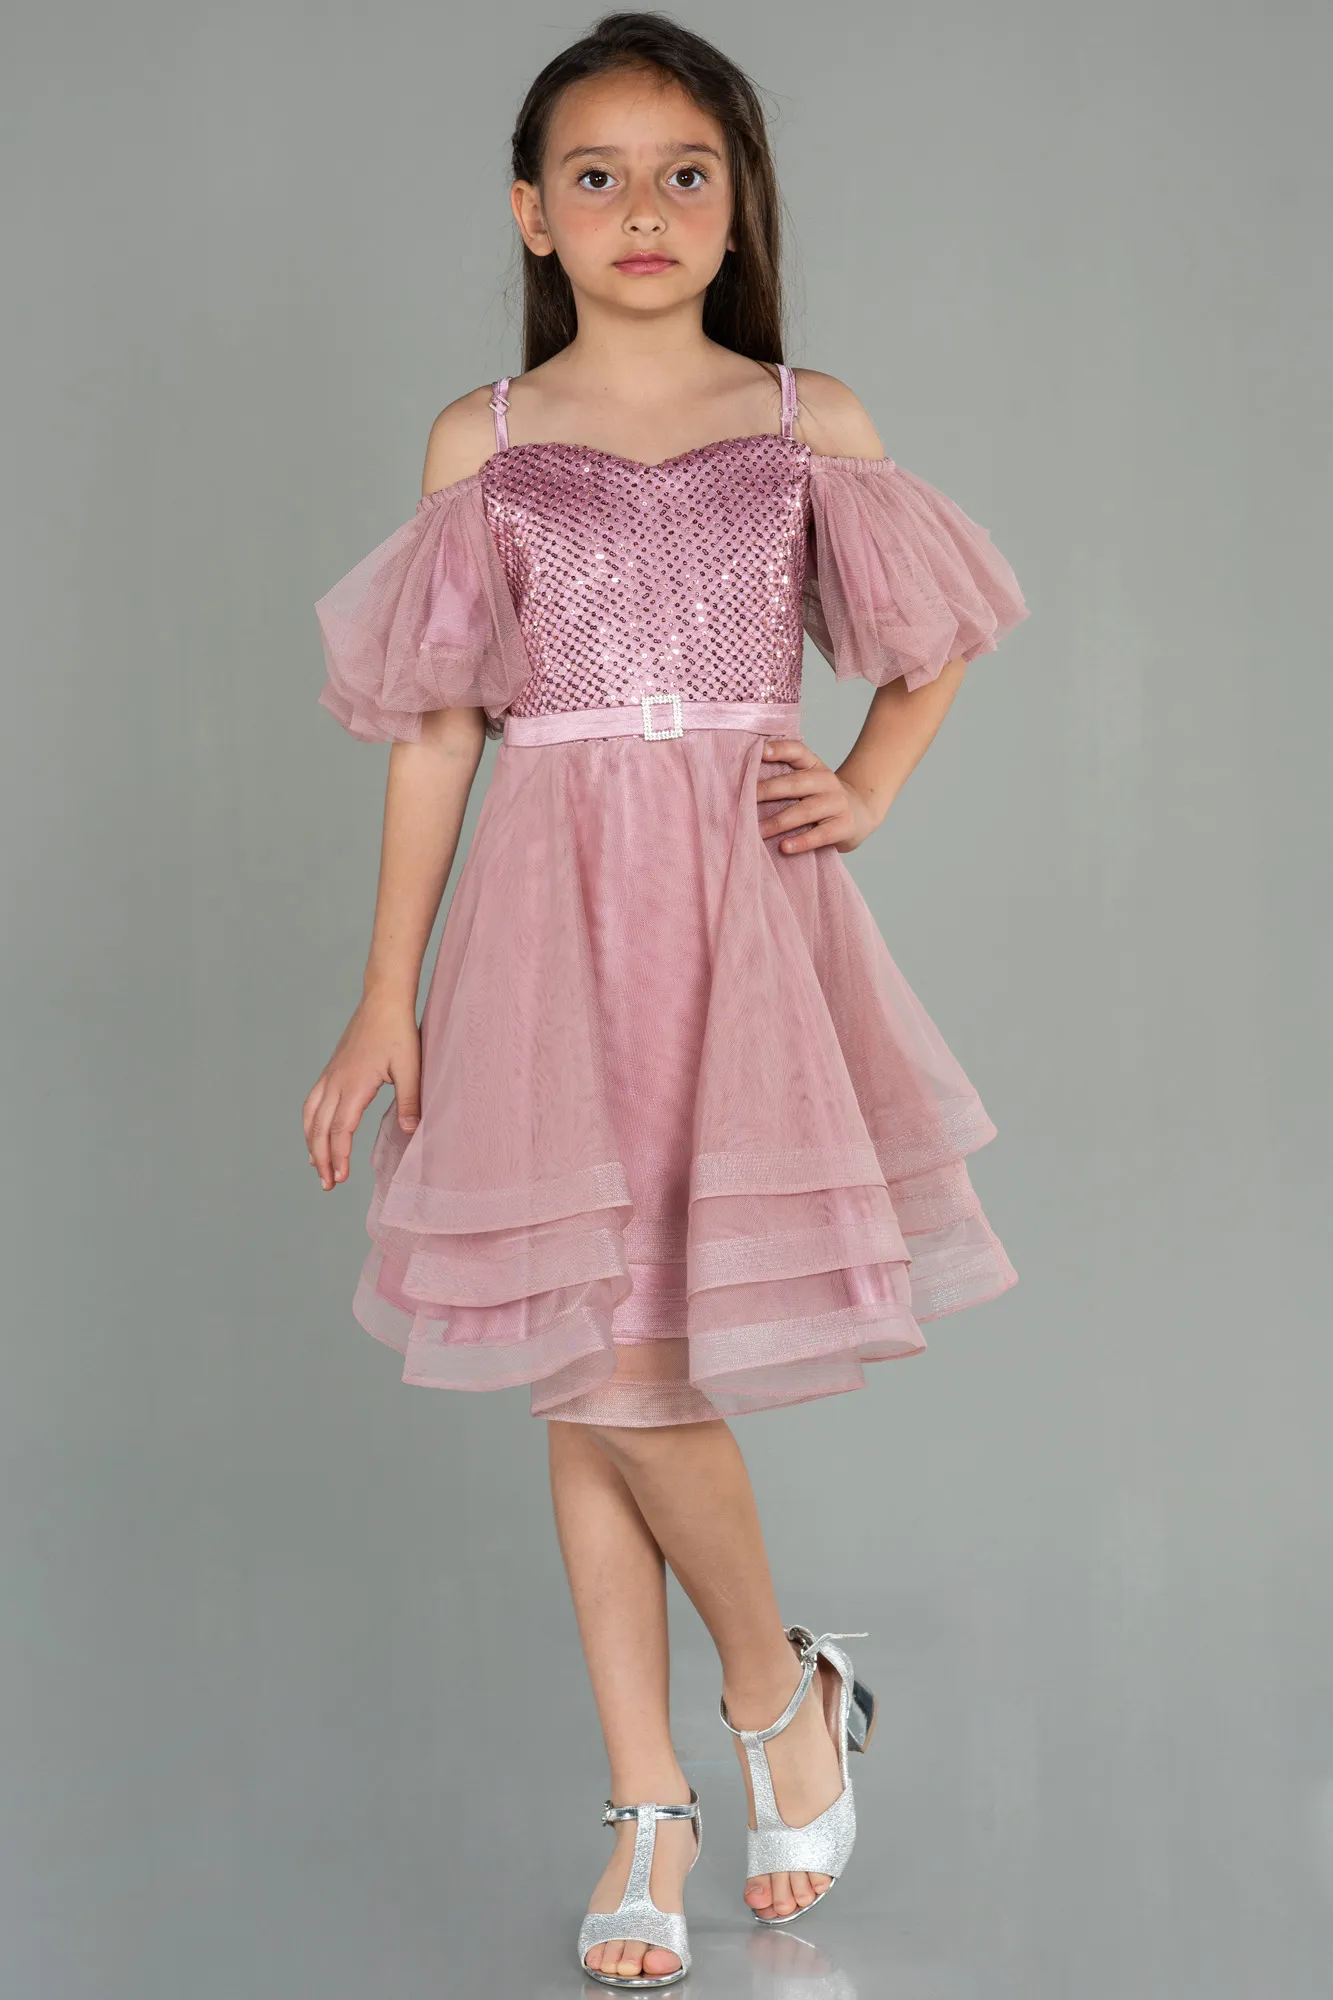 Powder Color-Short Girl Dress ABK1715